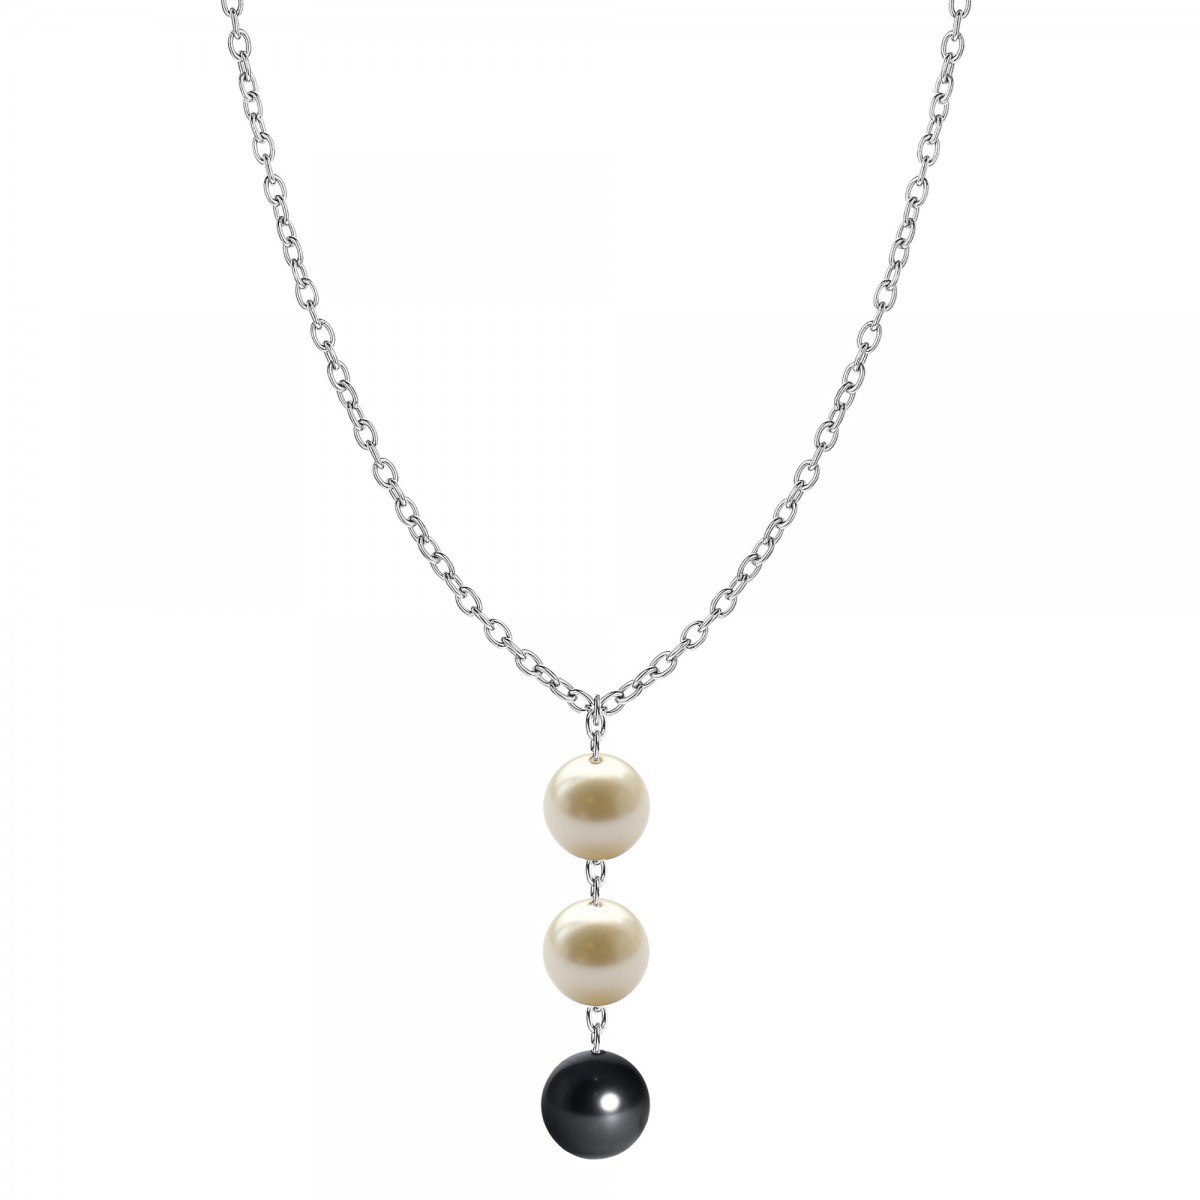 Collier SC Crystal décoré de perles scintillantes